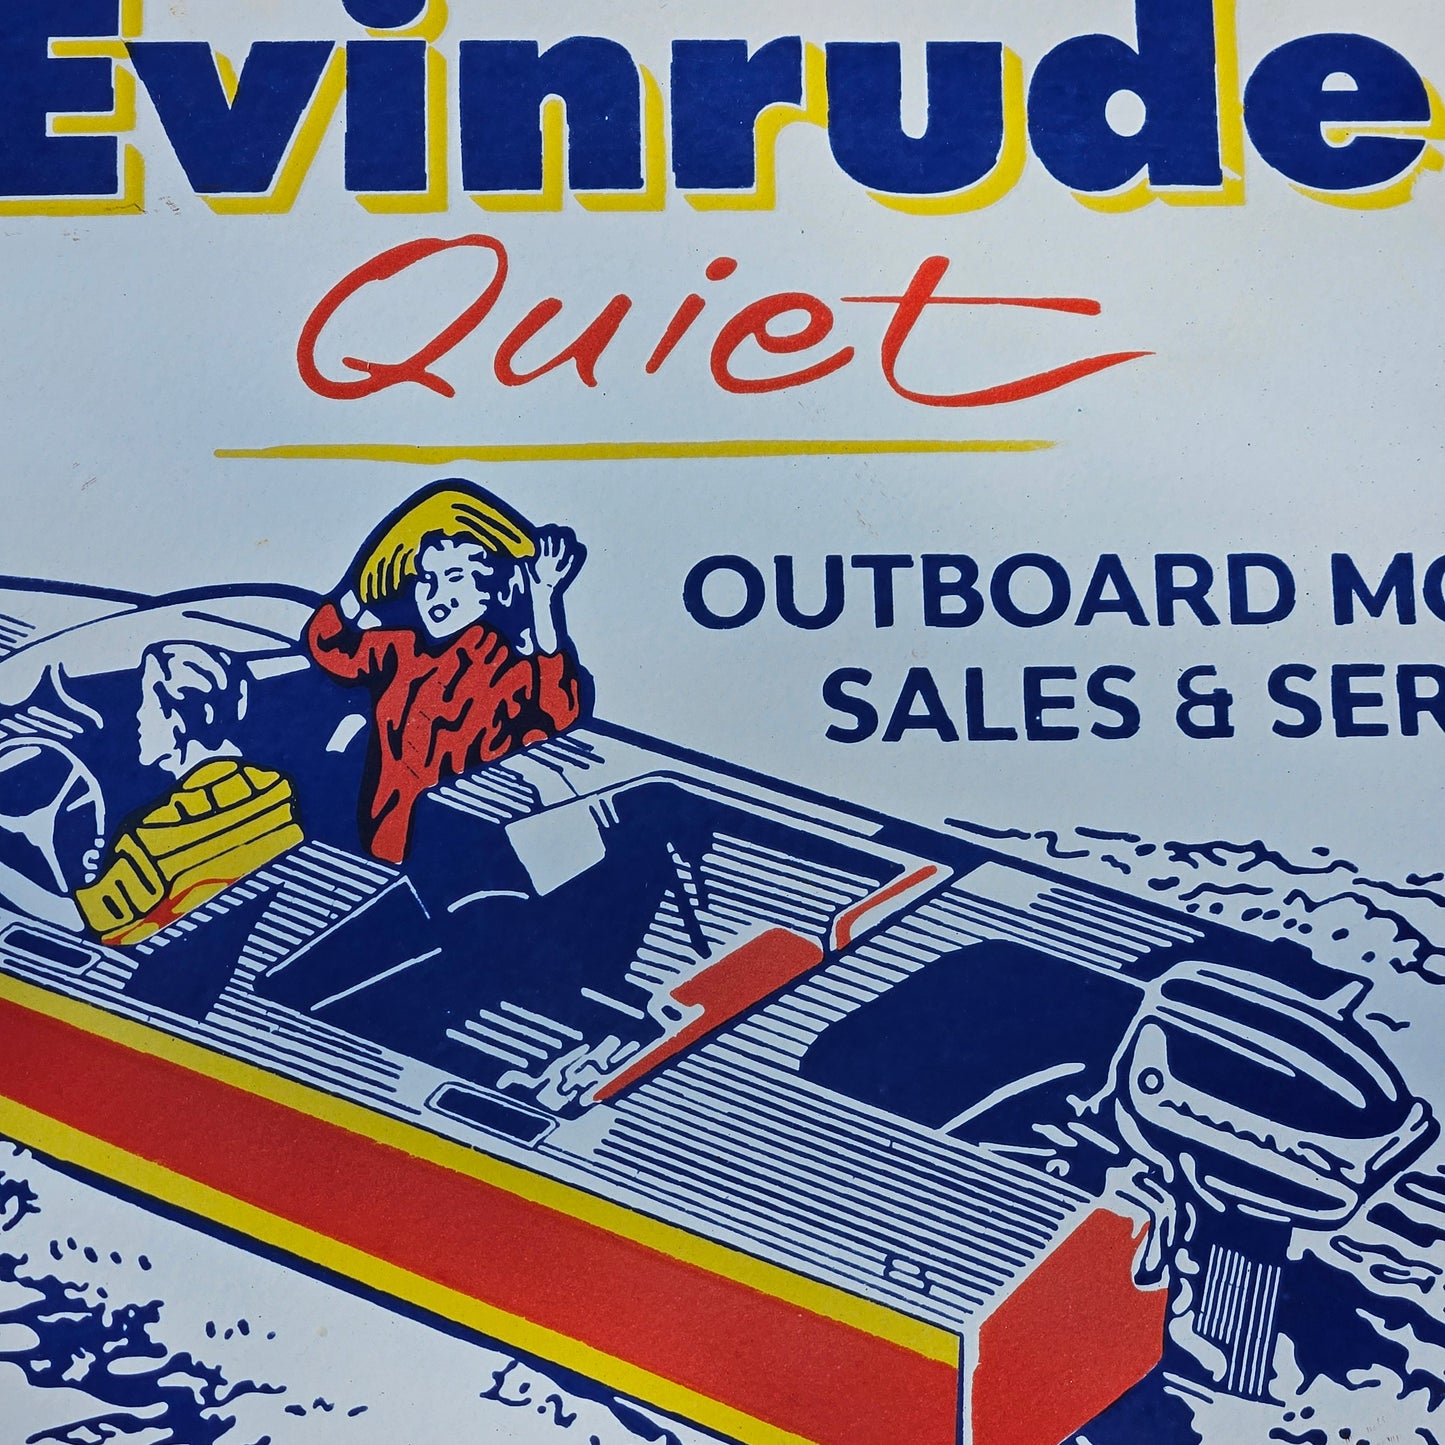 Evinrude Quiet Outboard Motor Sales & Service Porcelain on Metal